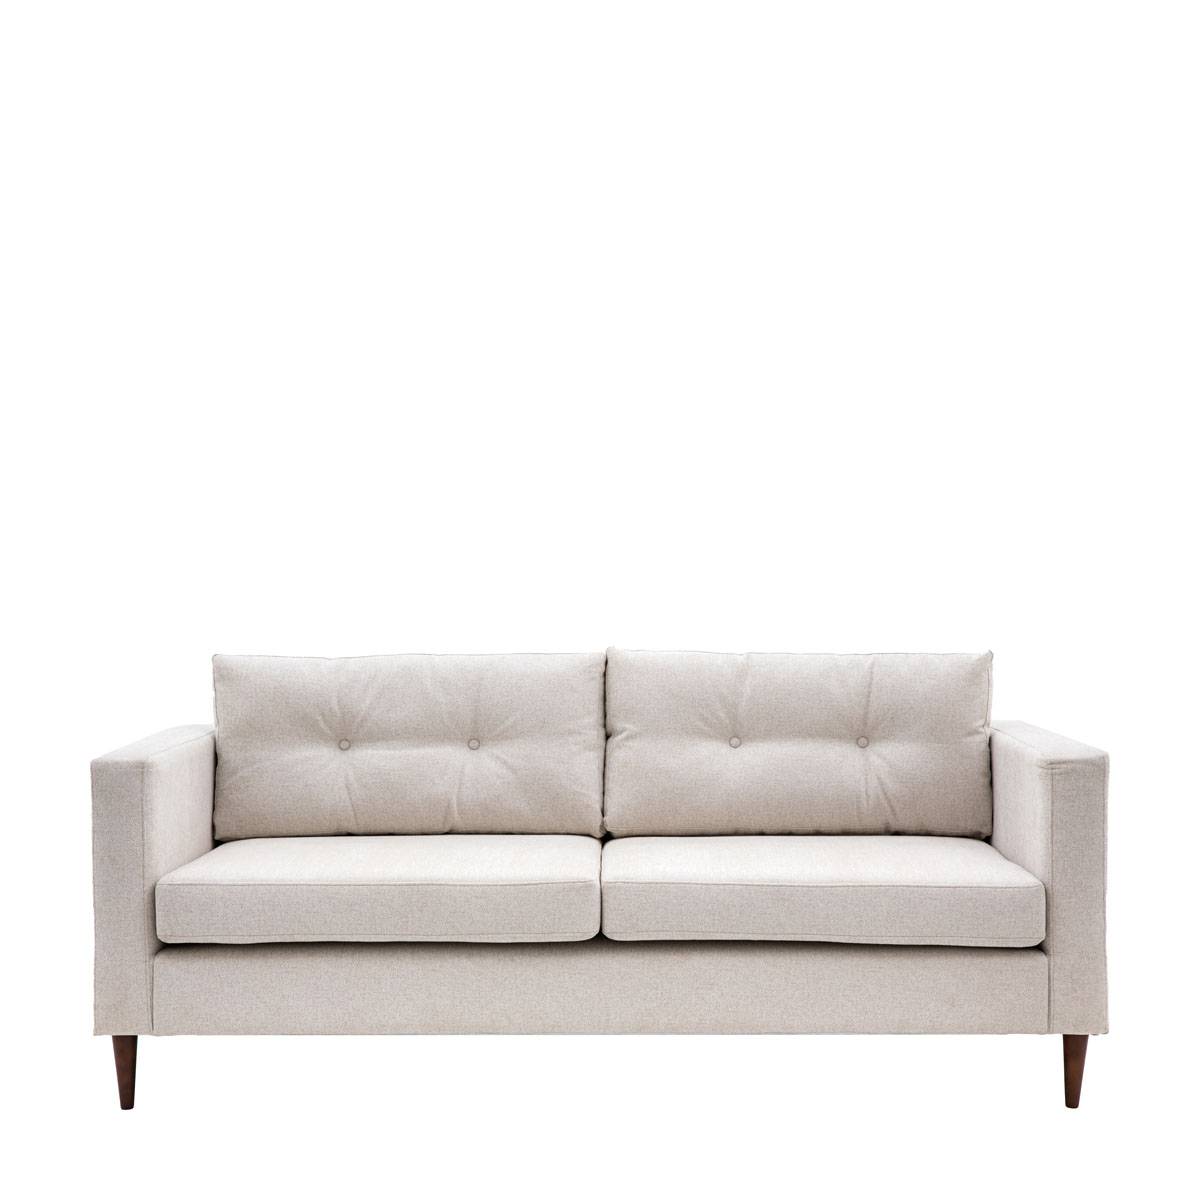 Whitwell Sofa 3 Seater Light Grey 1950x860x840mm